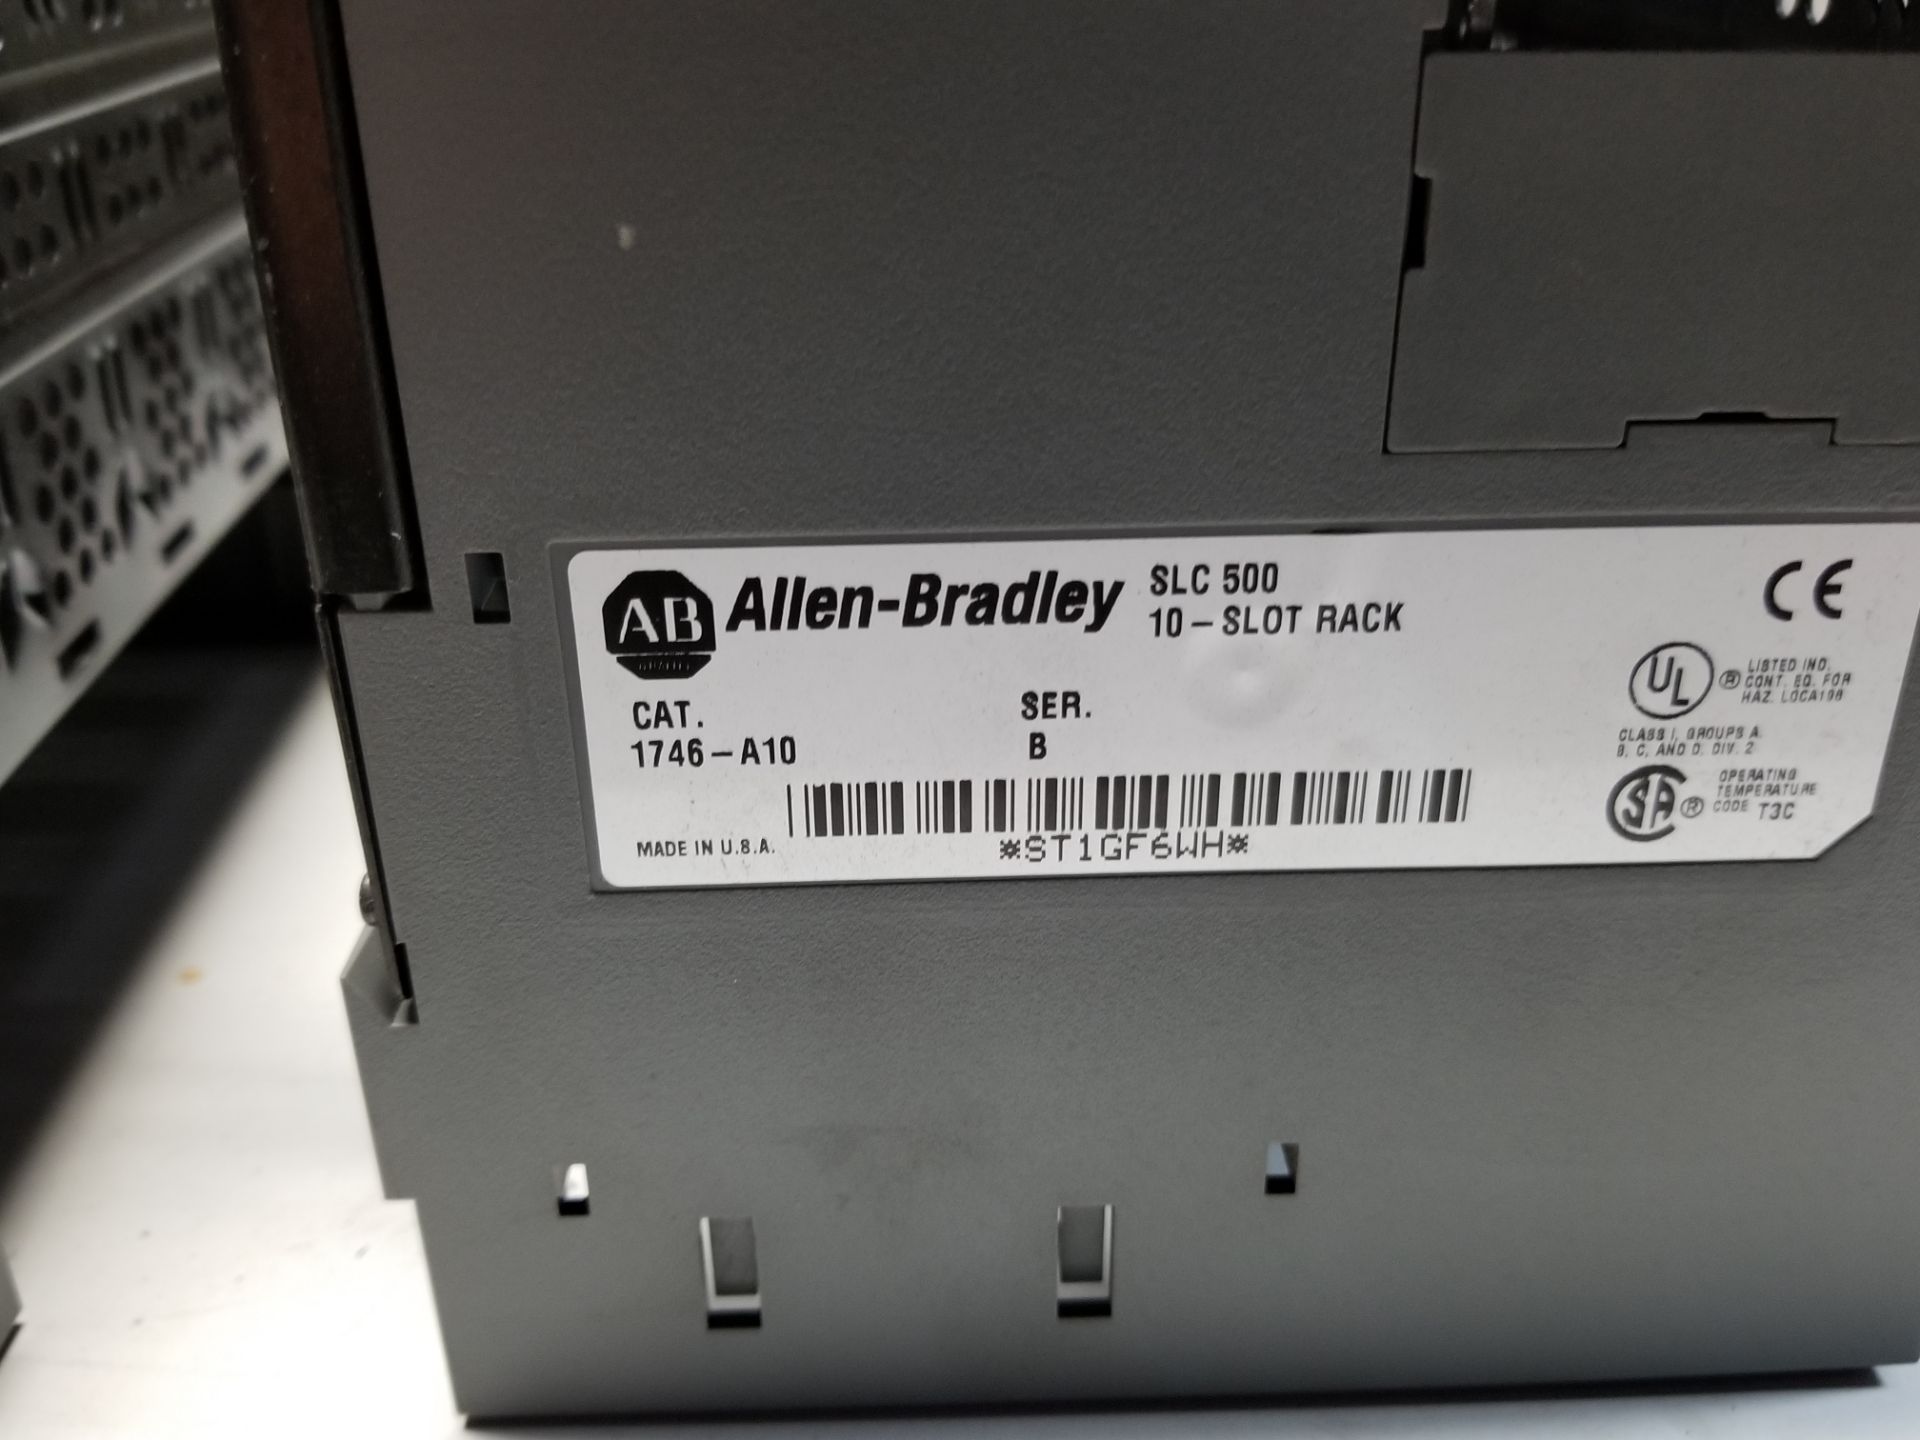 LOT OF ALLEN BRADLEY SLC 500 PLC RACKS WITH POWER SUPPLIES - Image 5 of 7